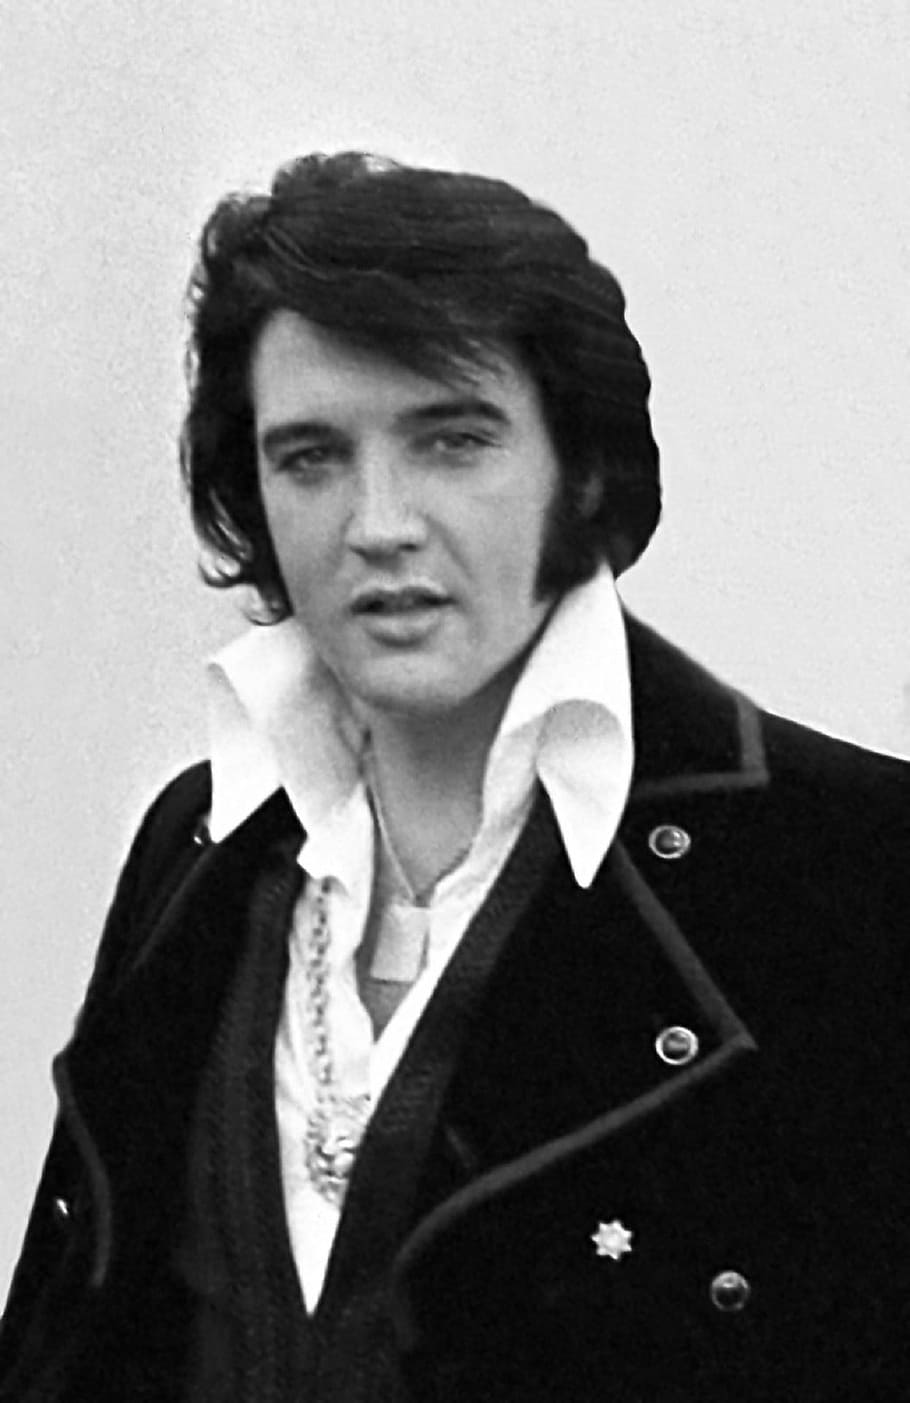 grayscale photo, black, suit jacket, grayscale, Elvis Presley, black suit, recording artist, actor, performer, stage